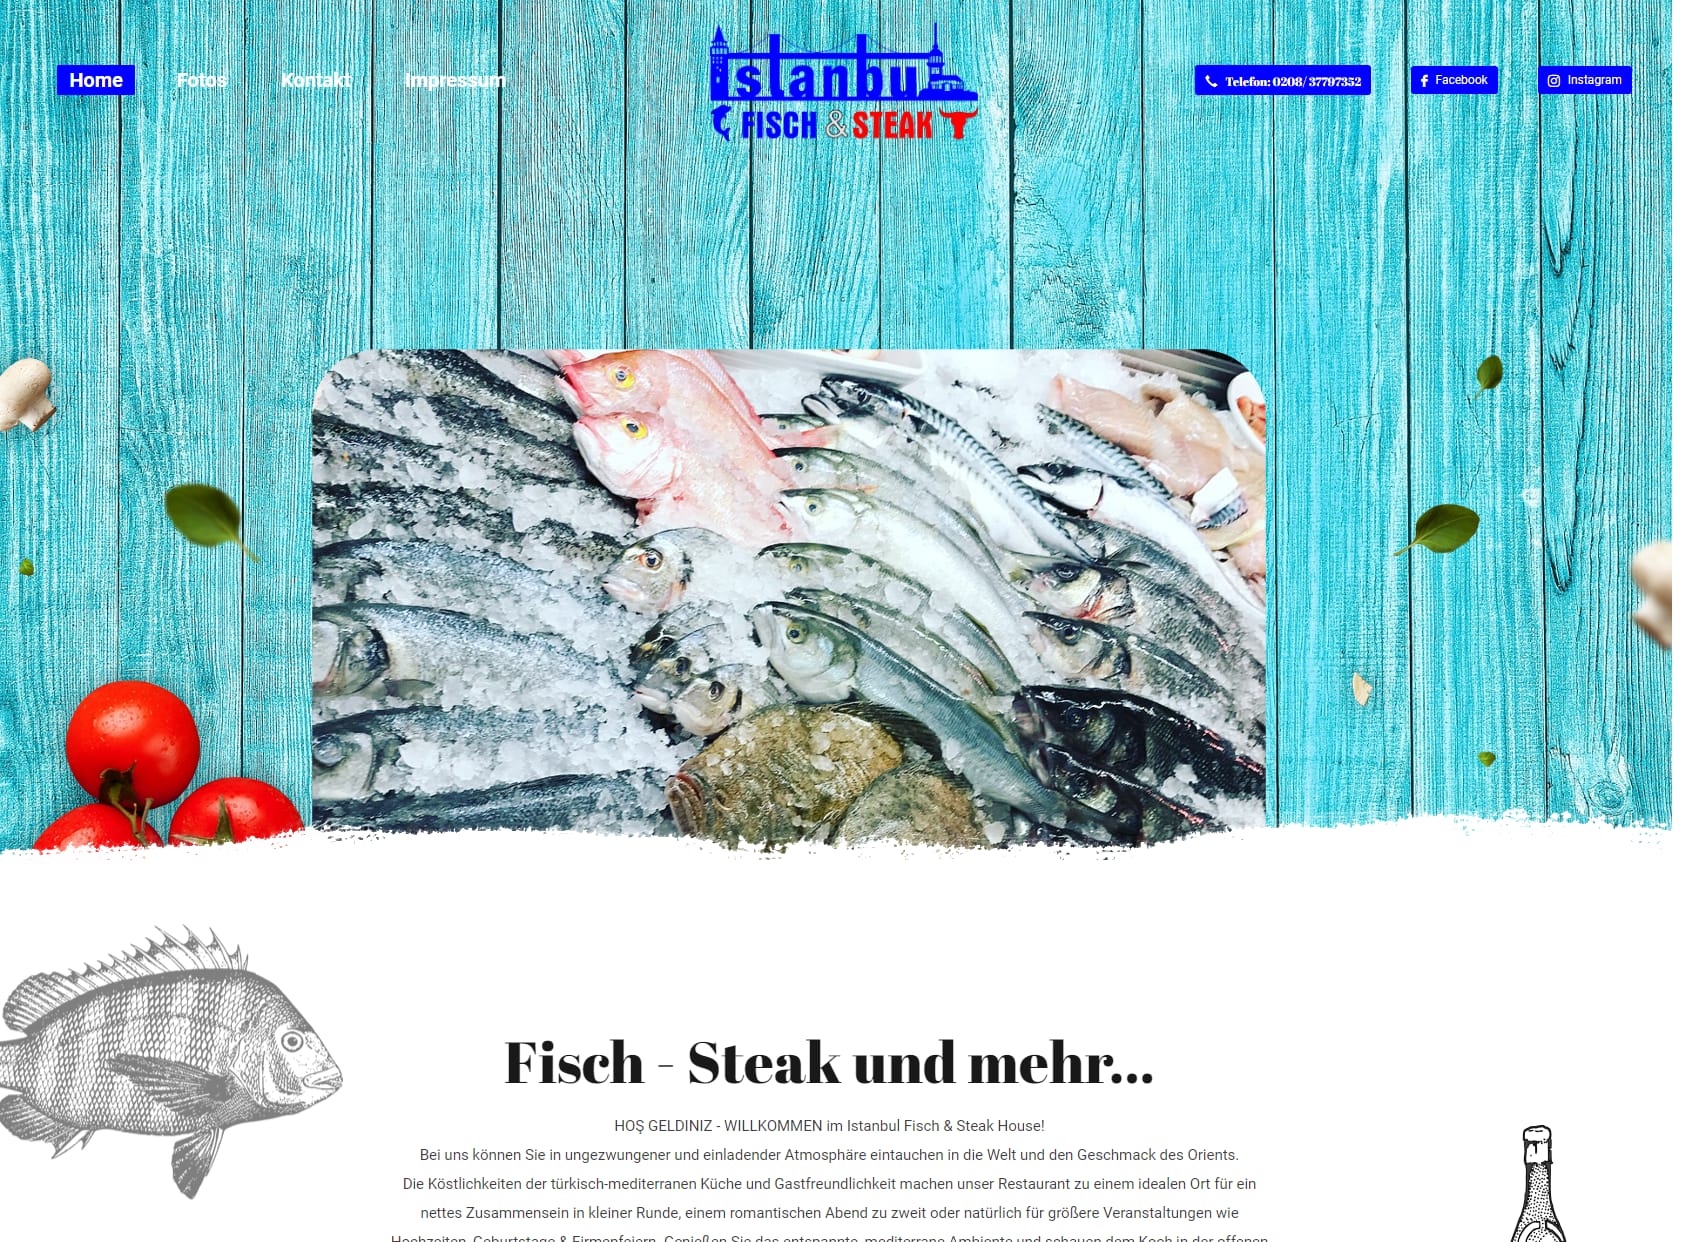 Istanbul Fish & Steak House